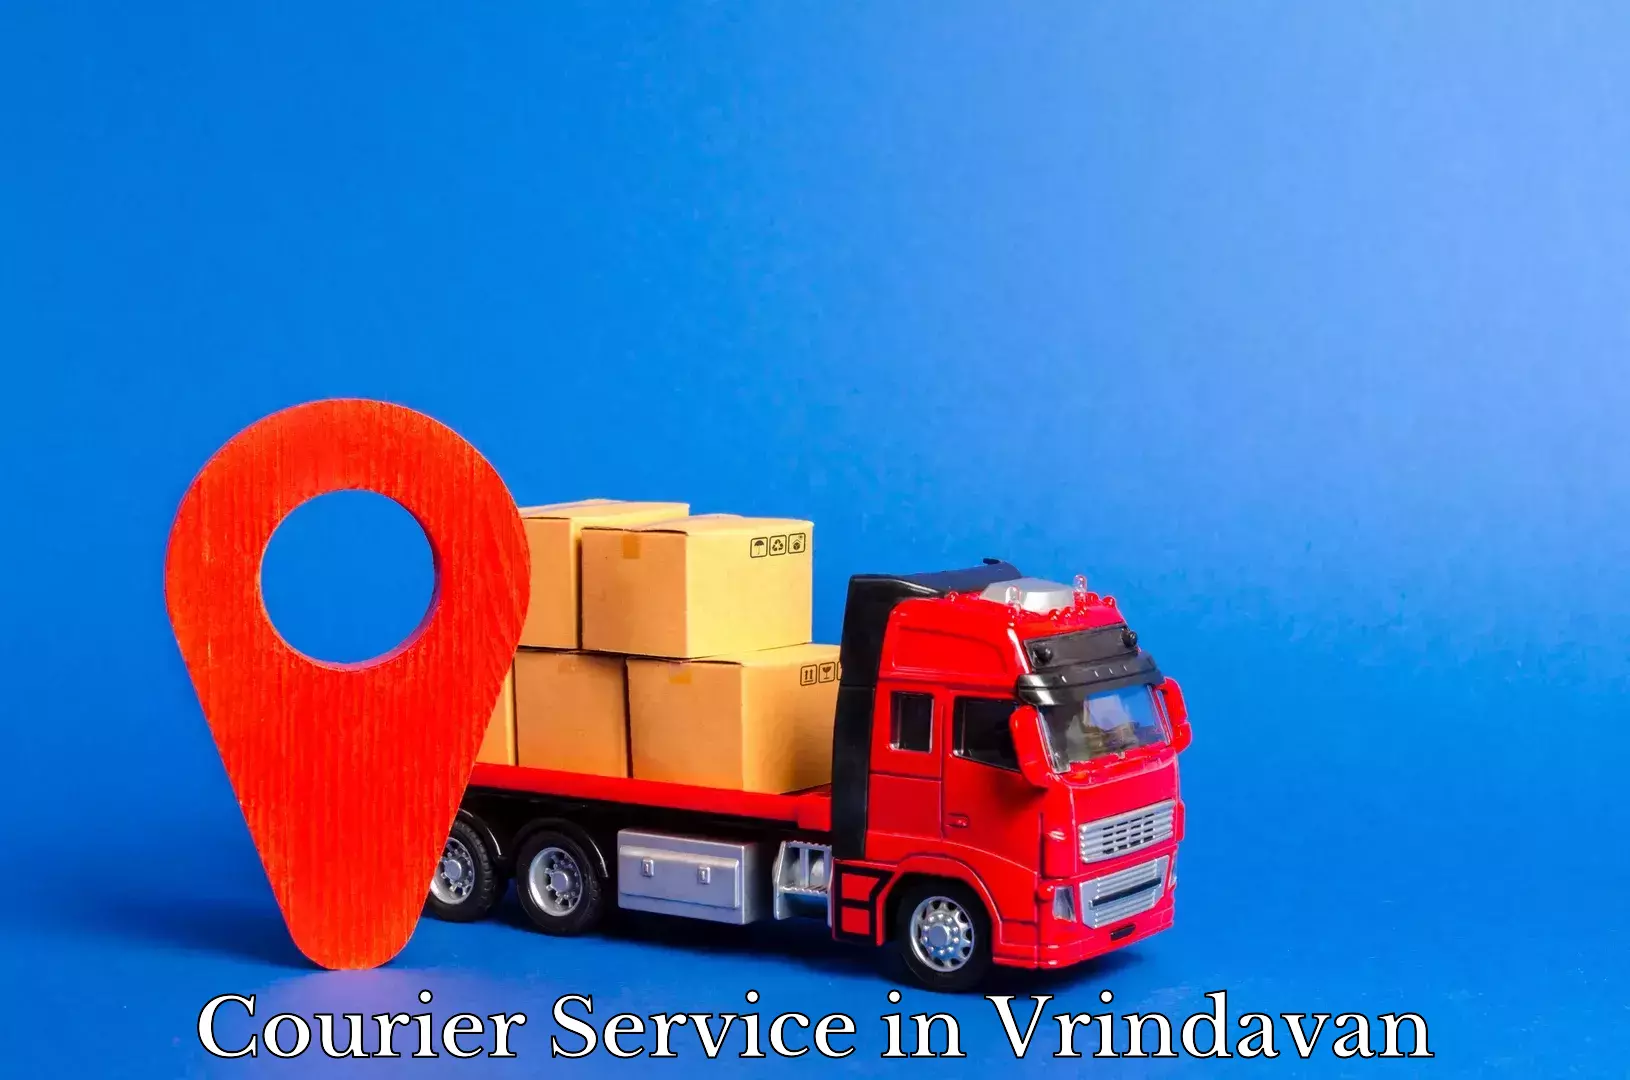 Courier service comparison in Vrindavan